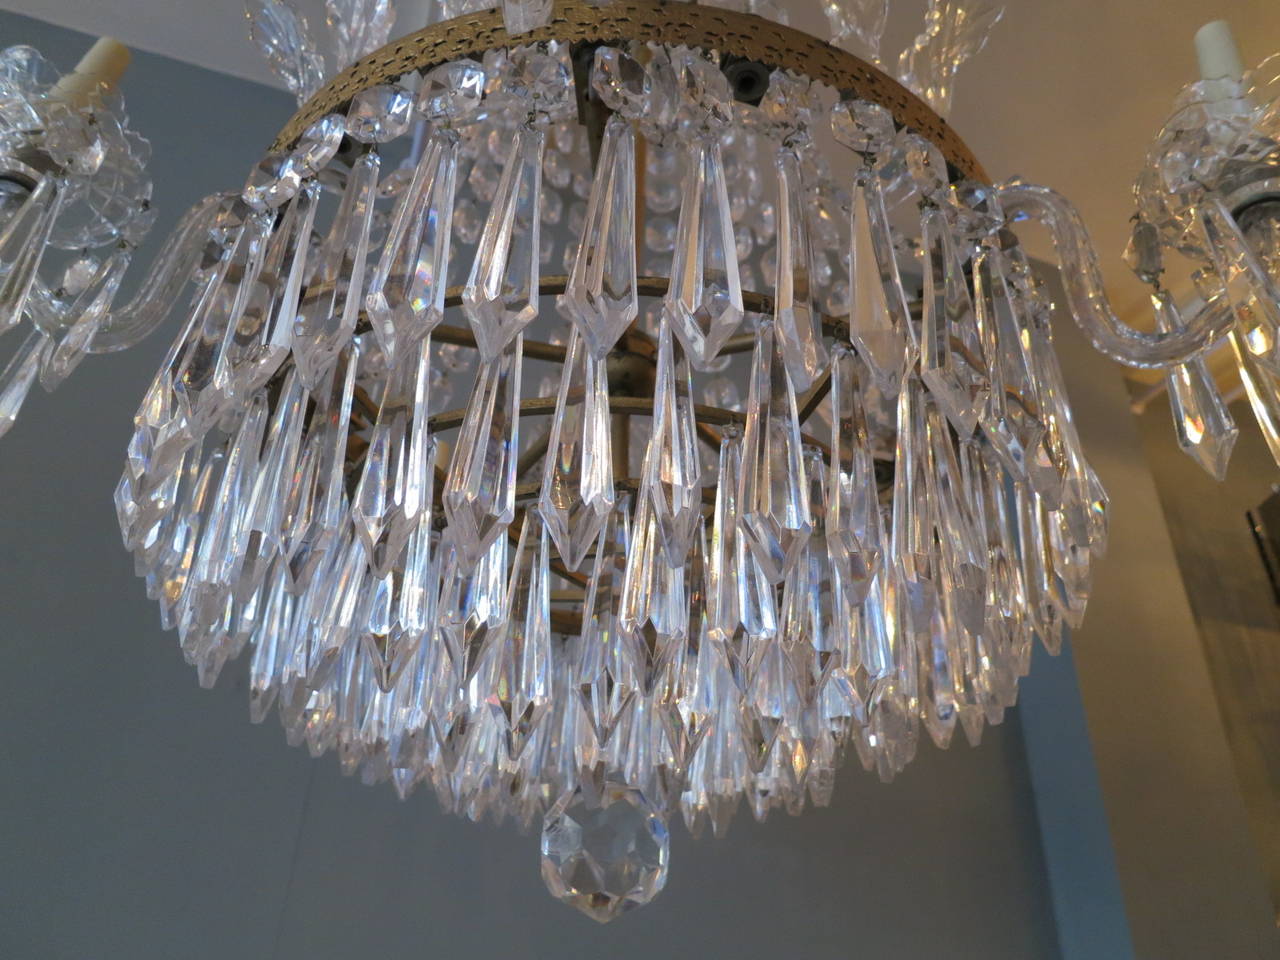 waterford chandelier